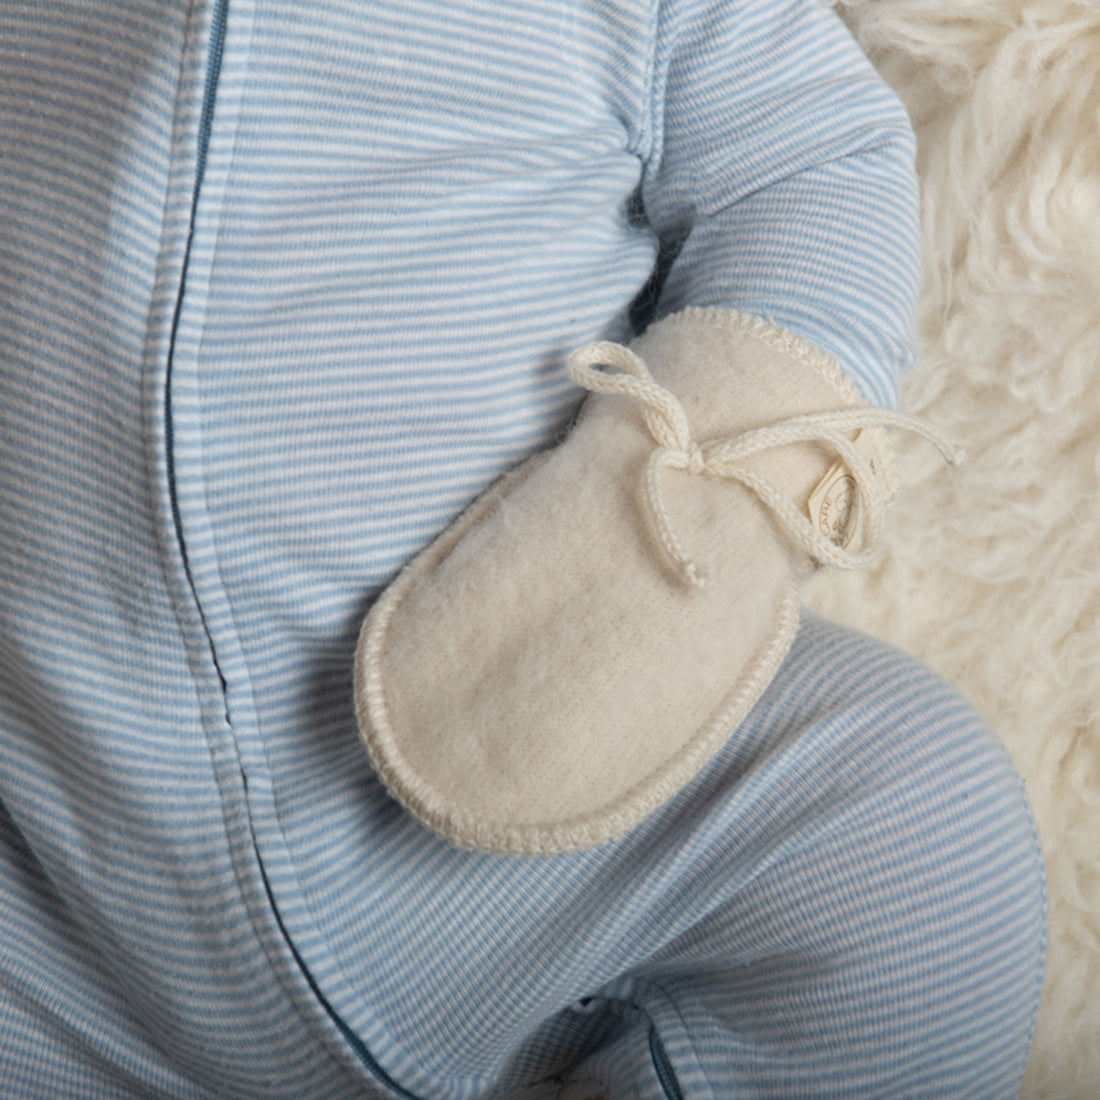 OUTLET LANACare Baby Mittens in Organic Merino Wool